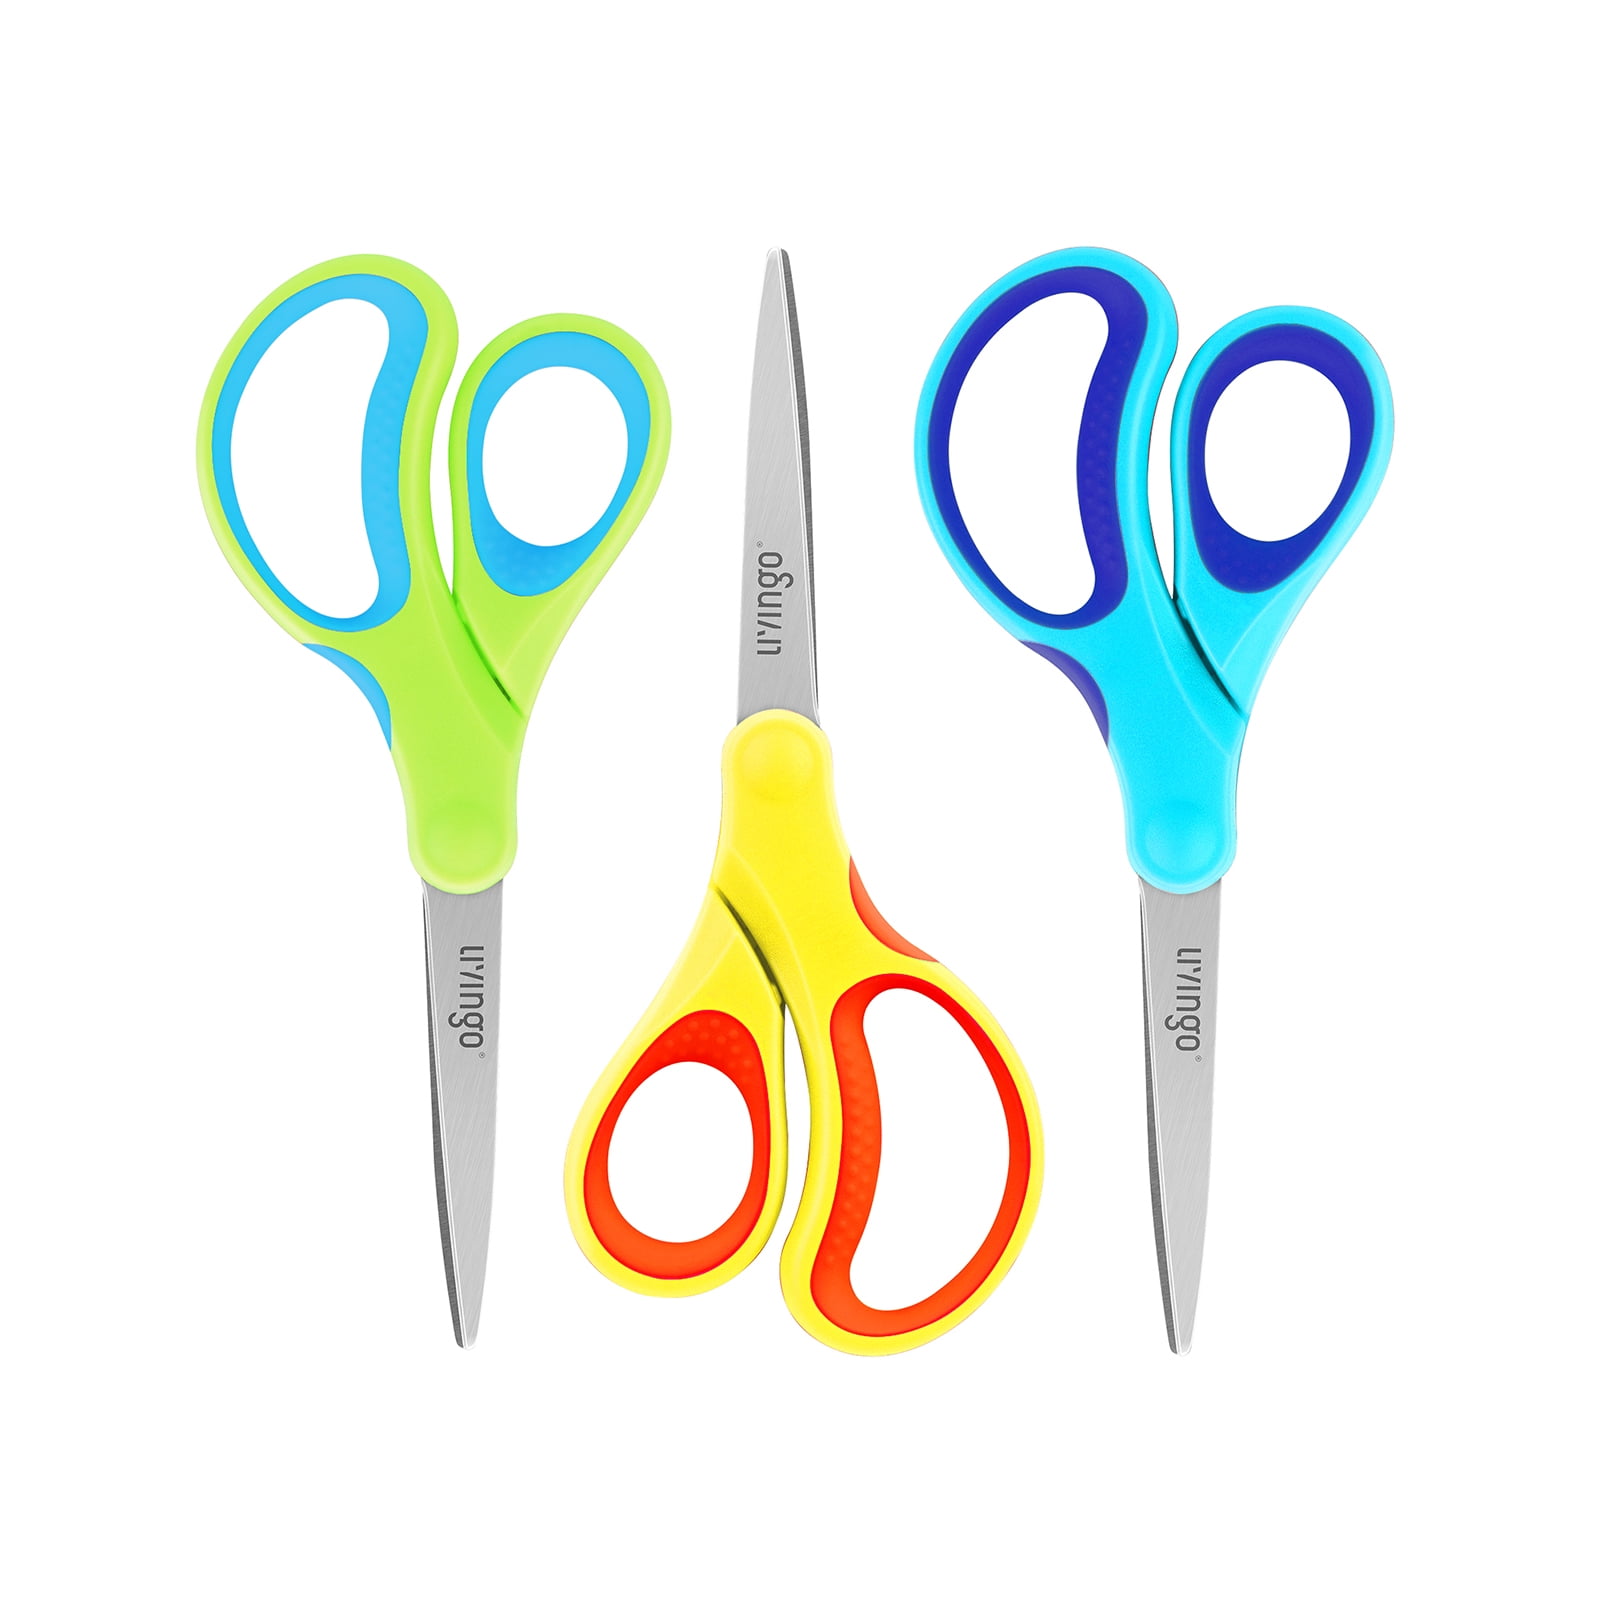 Stanley Minnow™ 5 Kids Scissors, 2-Pack